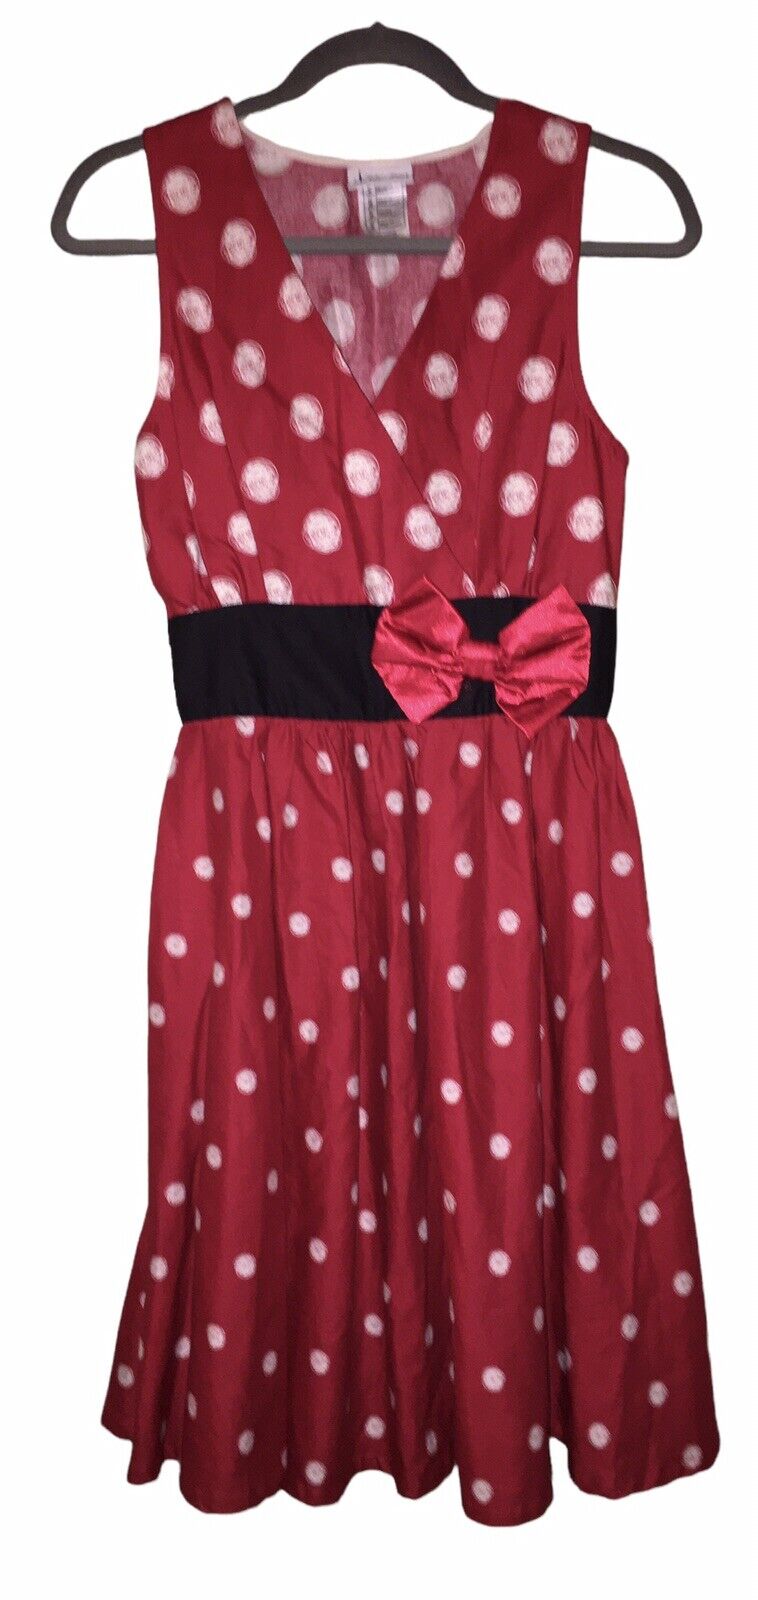 DISNEY Parks Sz Small Minnie Mouse Polka Dot Red White Shift Sleeveless Dress